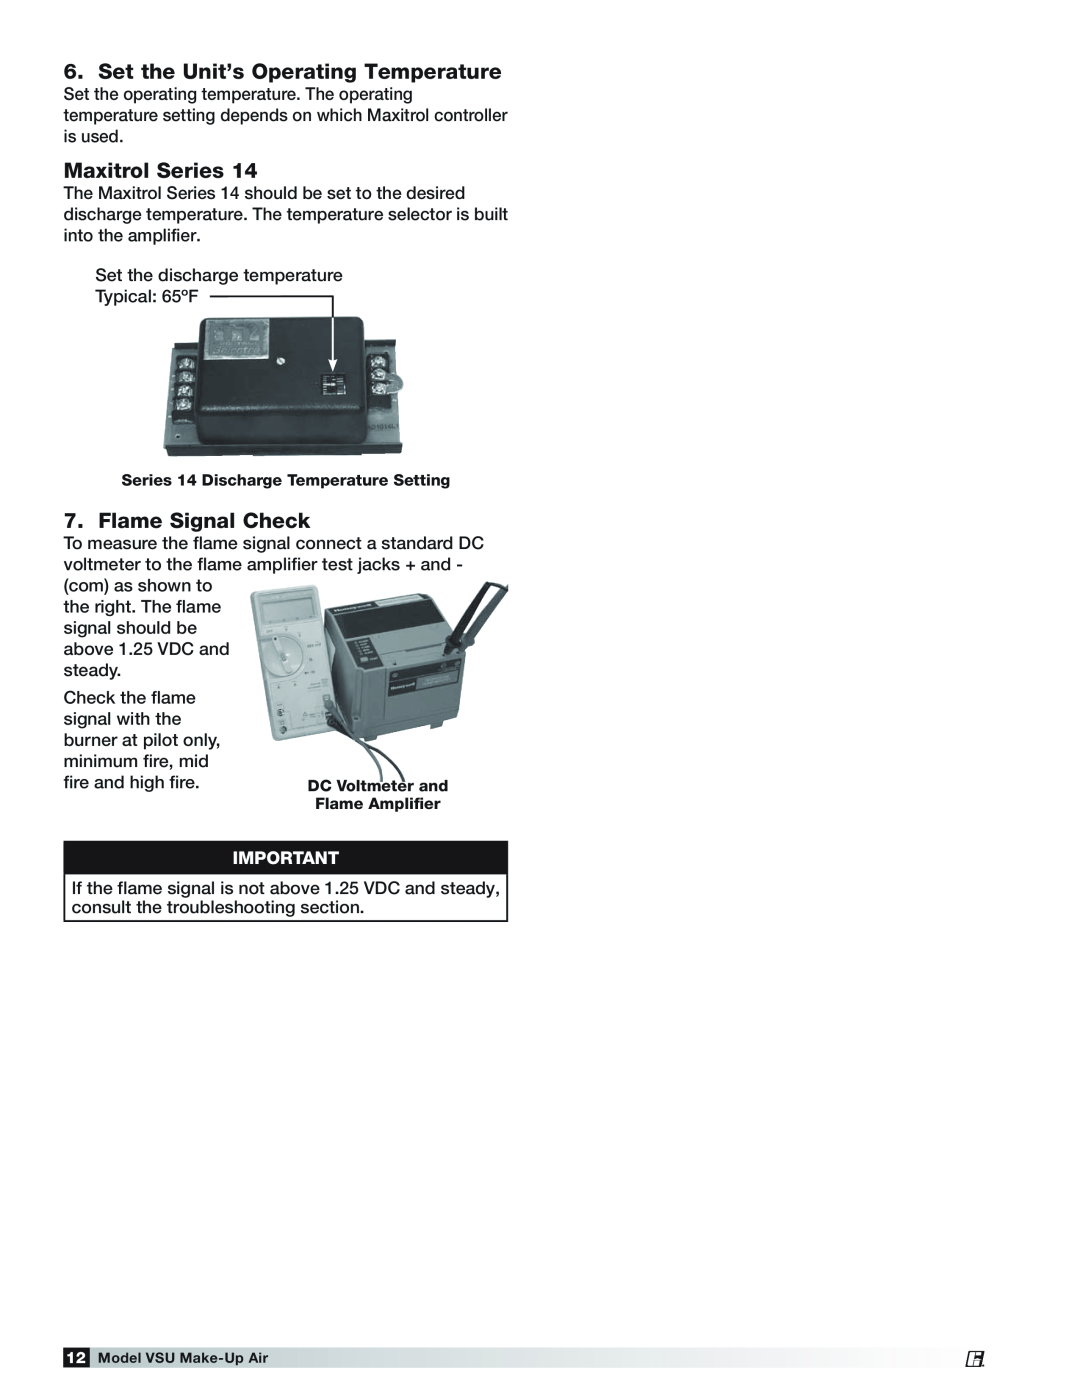 Greenheck Fan VSU manual Set the Unit’s Operating Temperature, Maxitrol Series, Flame Signal Check 